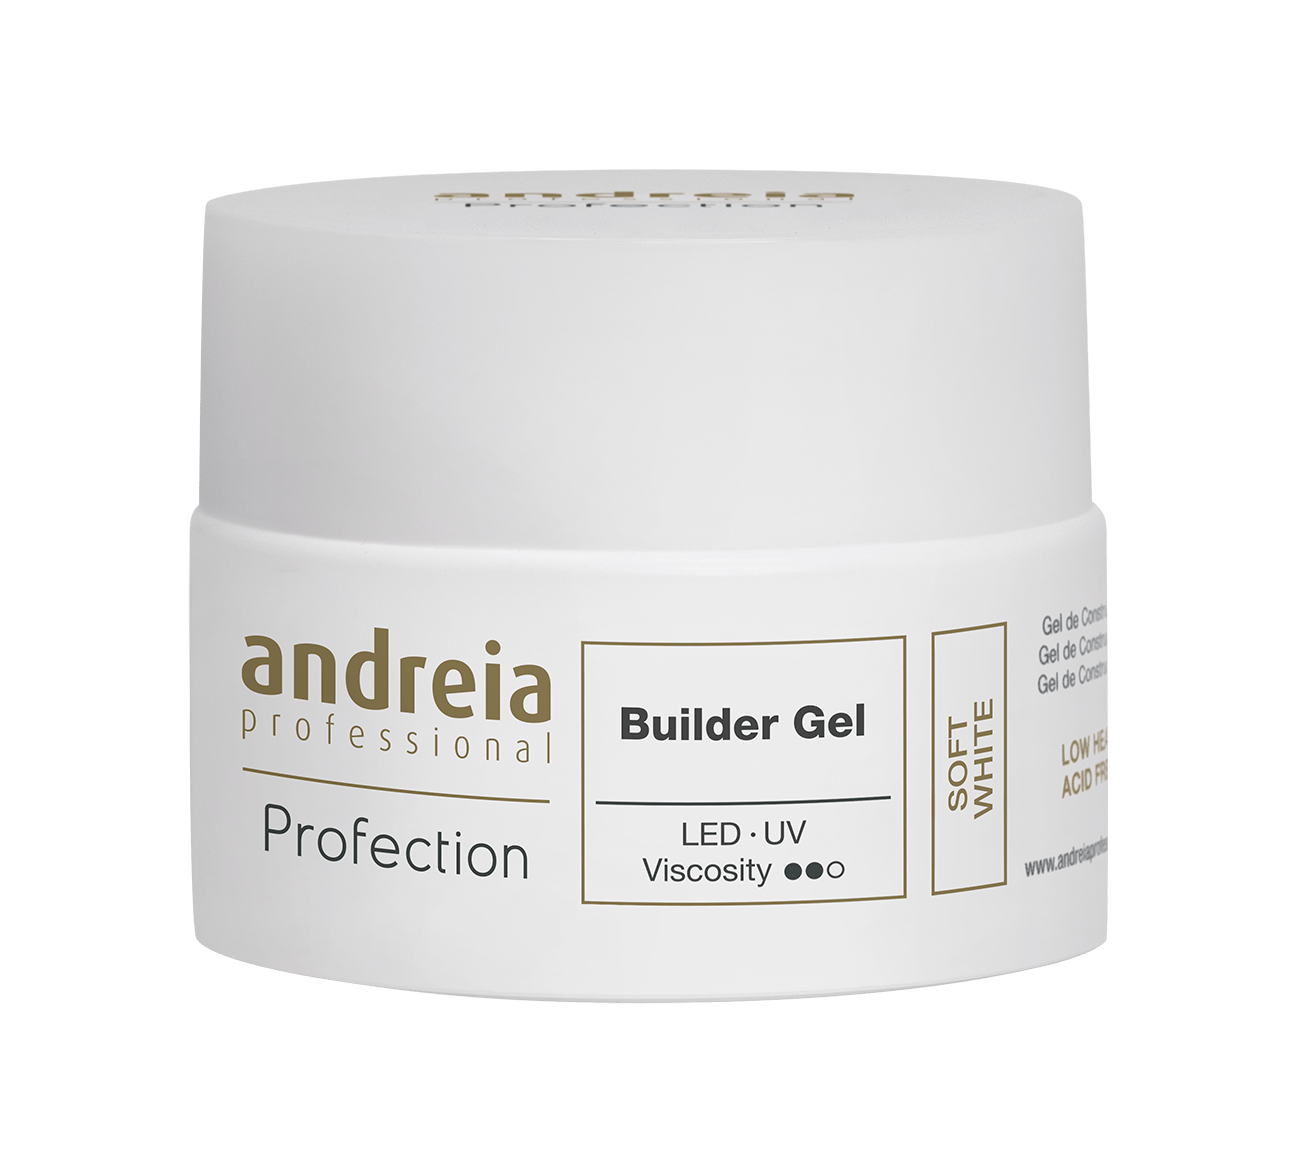 Andreia Professional Profection Builder Gel Soft Withe 44g